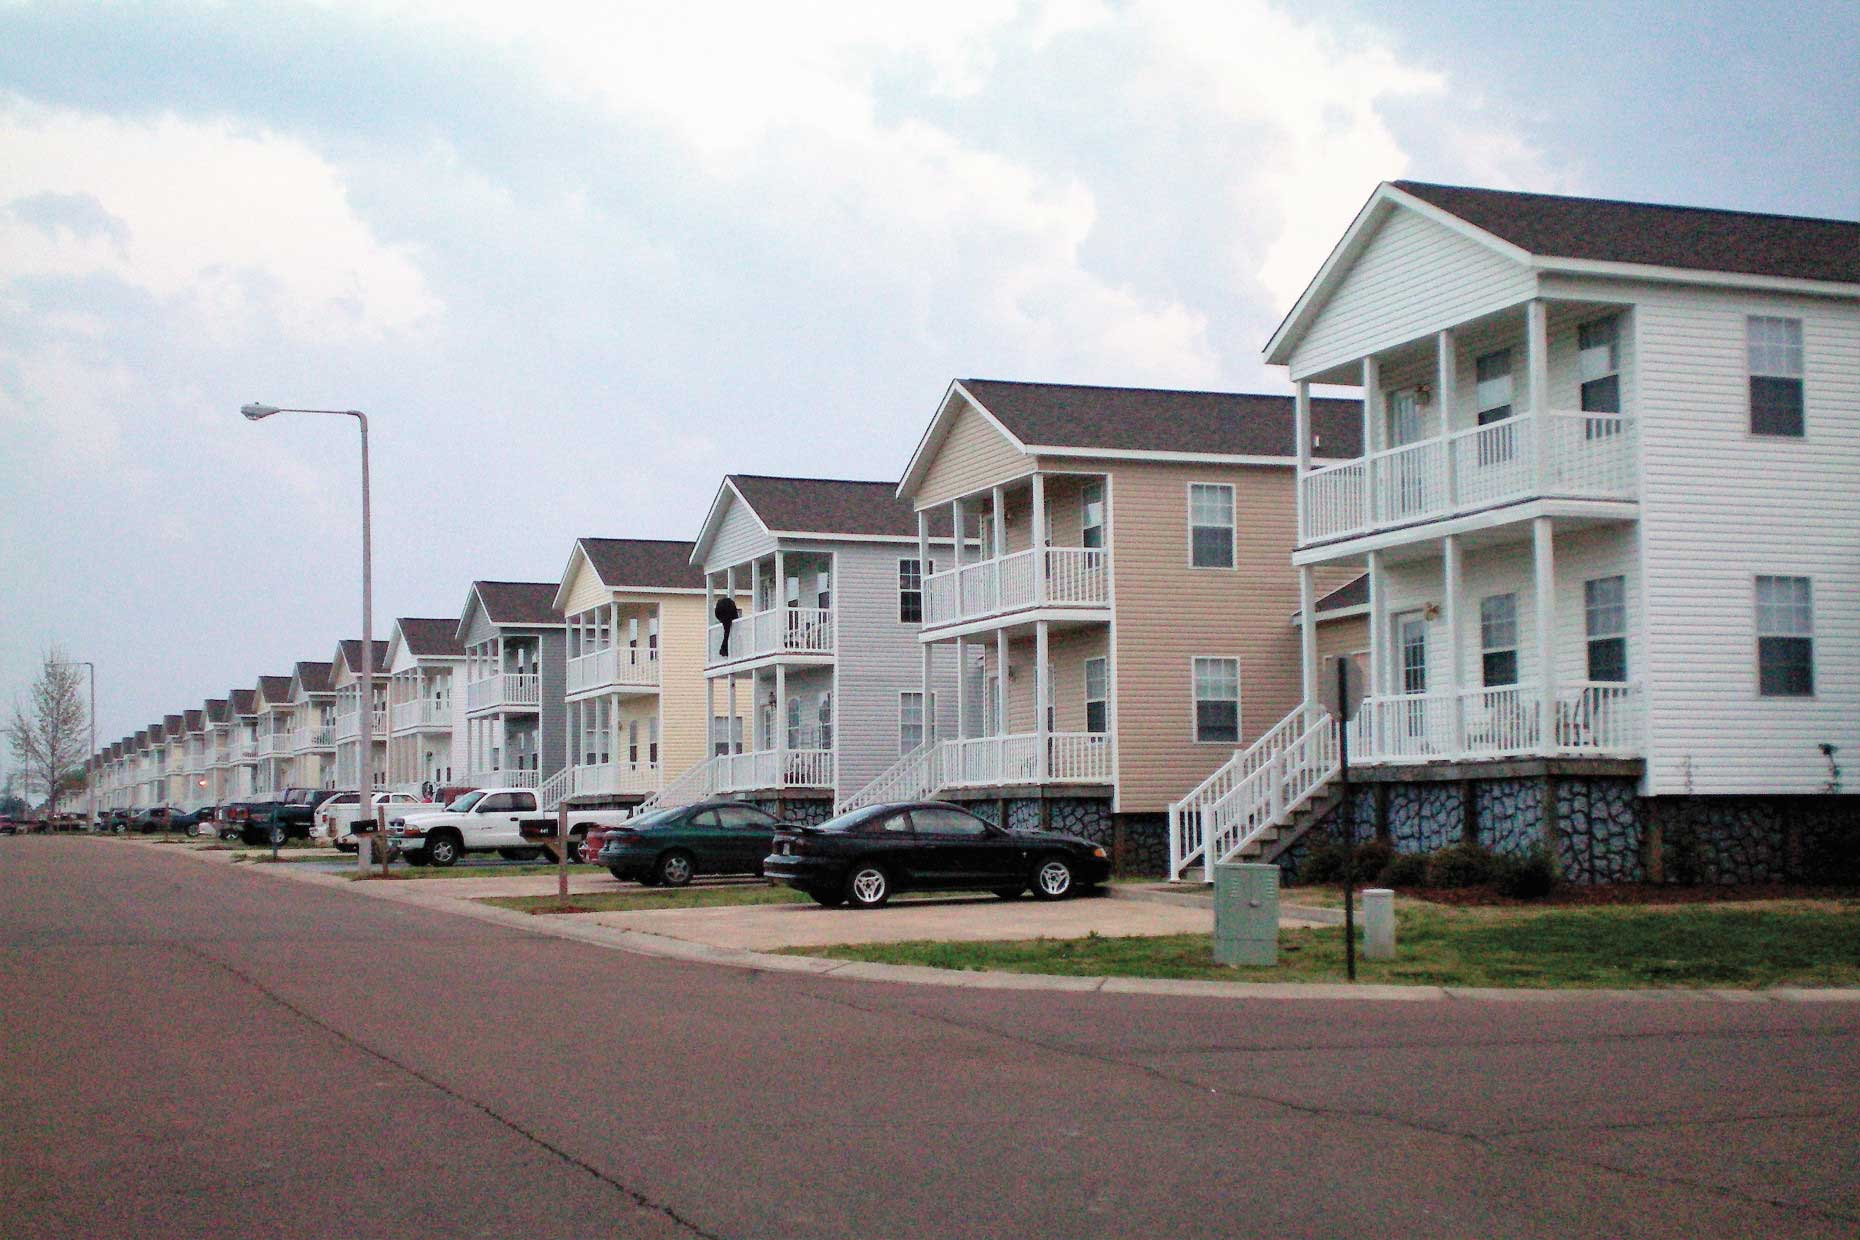 row of homes down street